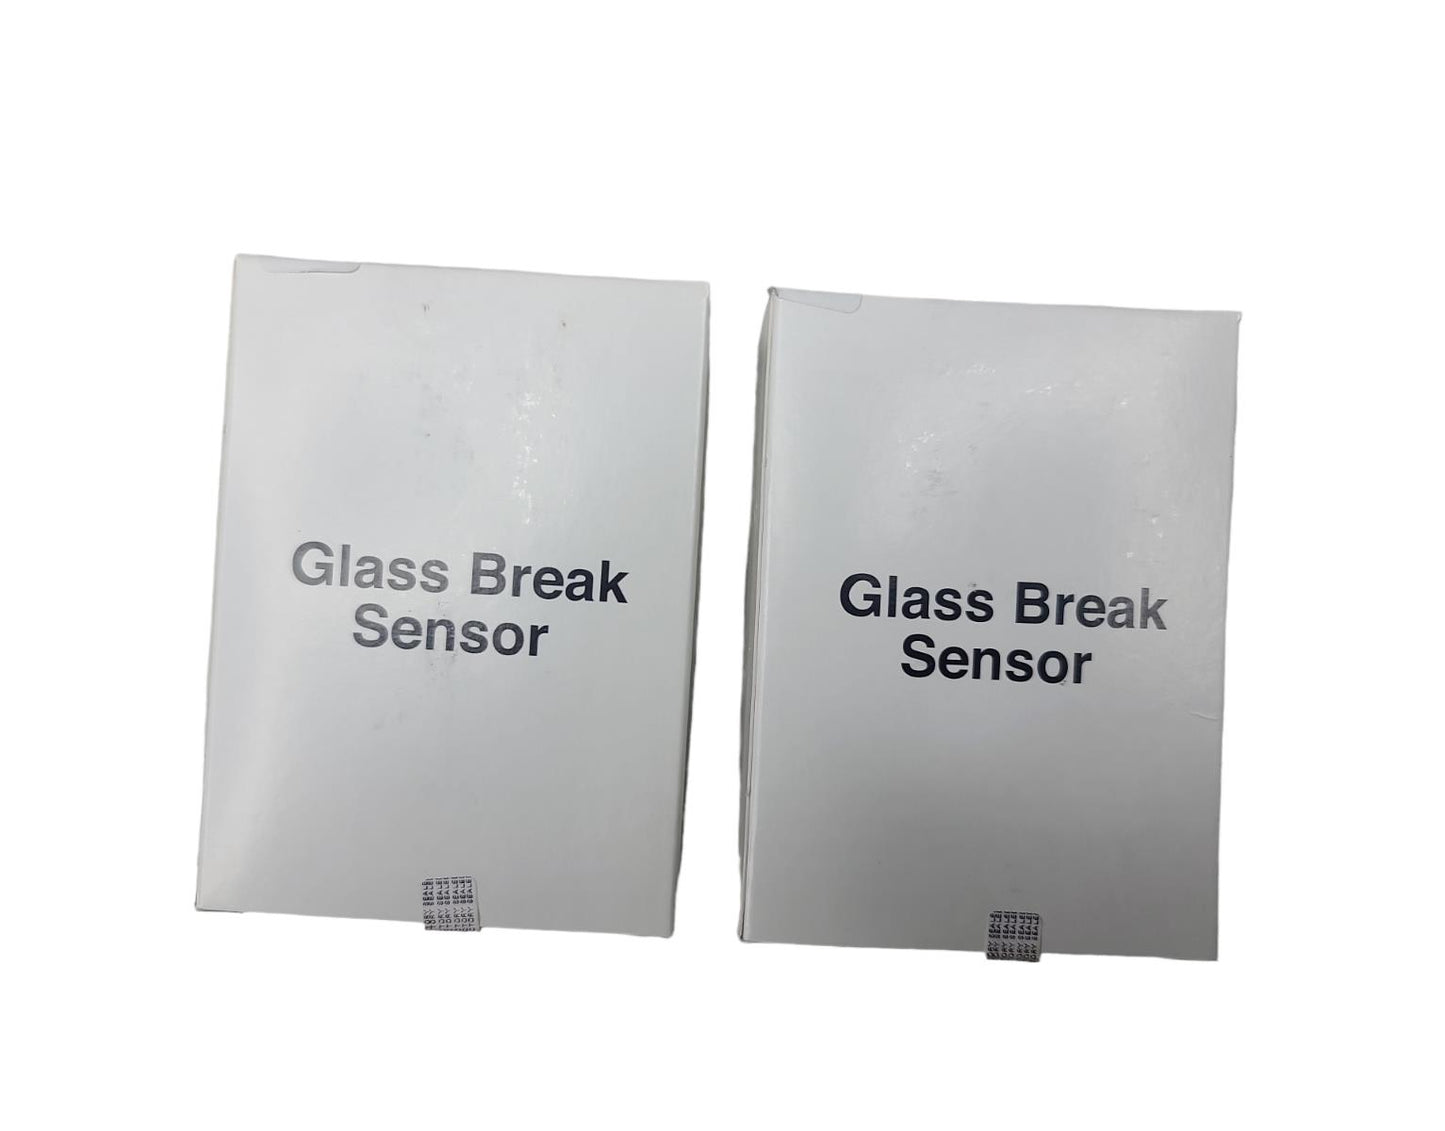 Lot Of 2 SMC Networks Alarm Glassbreak Detector SMCGB10-Z New Open Box